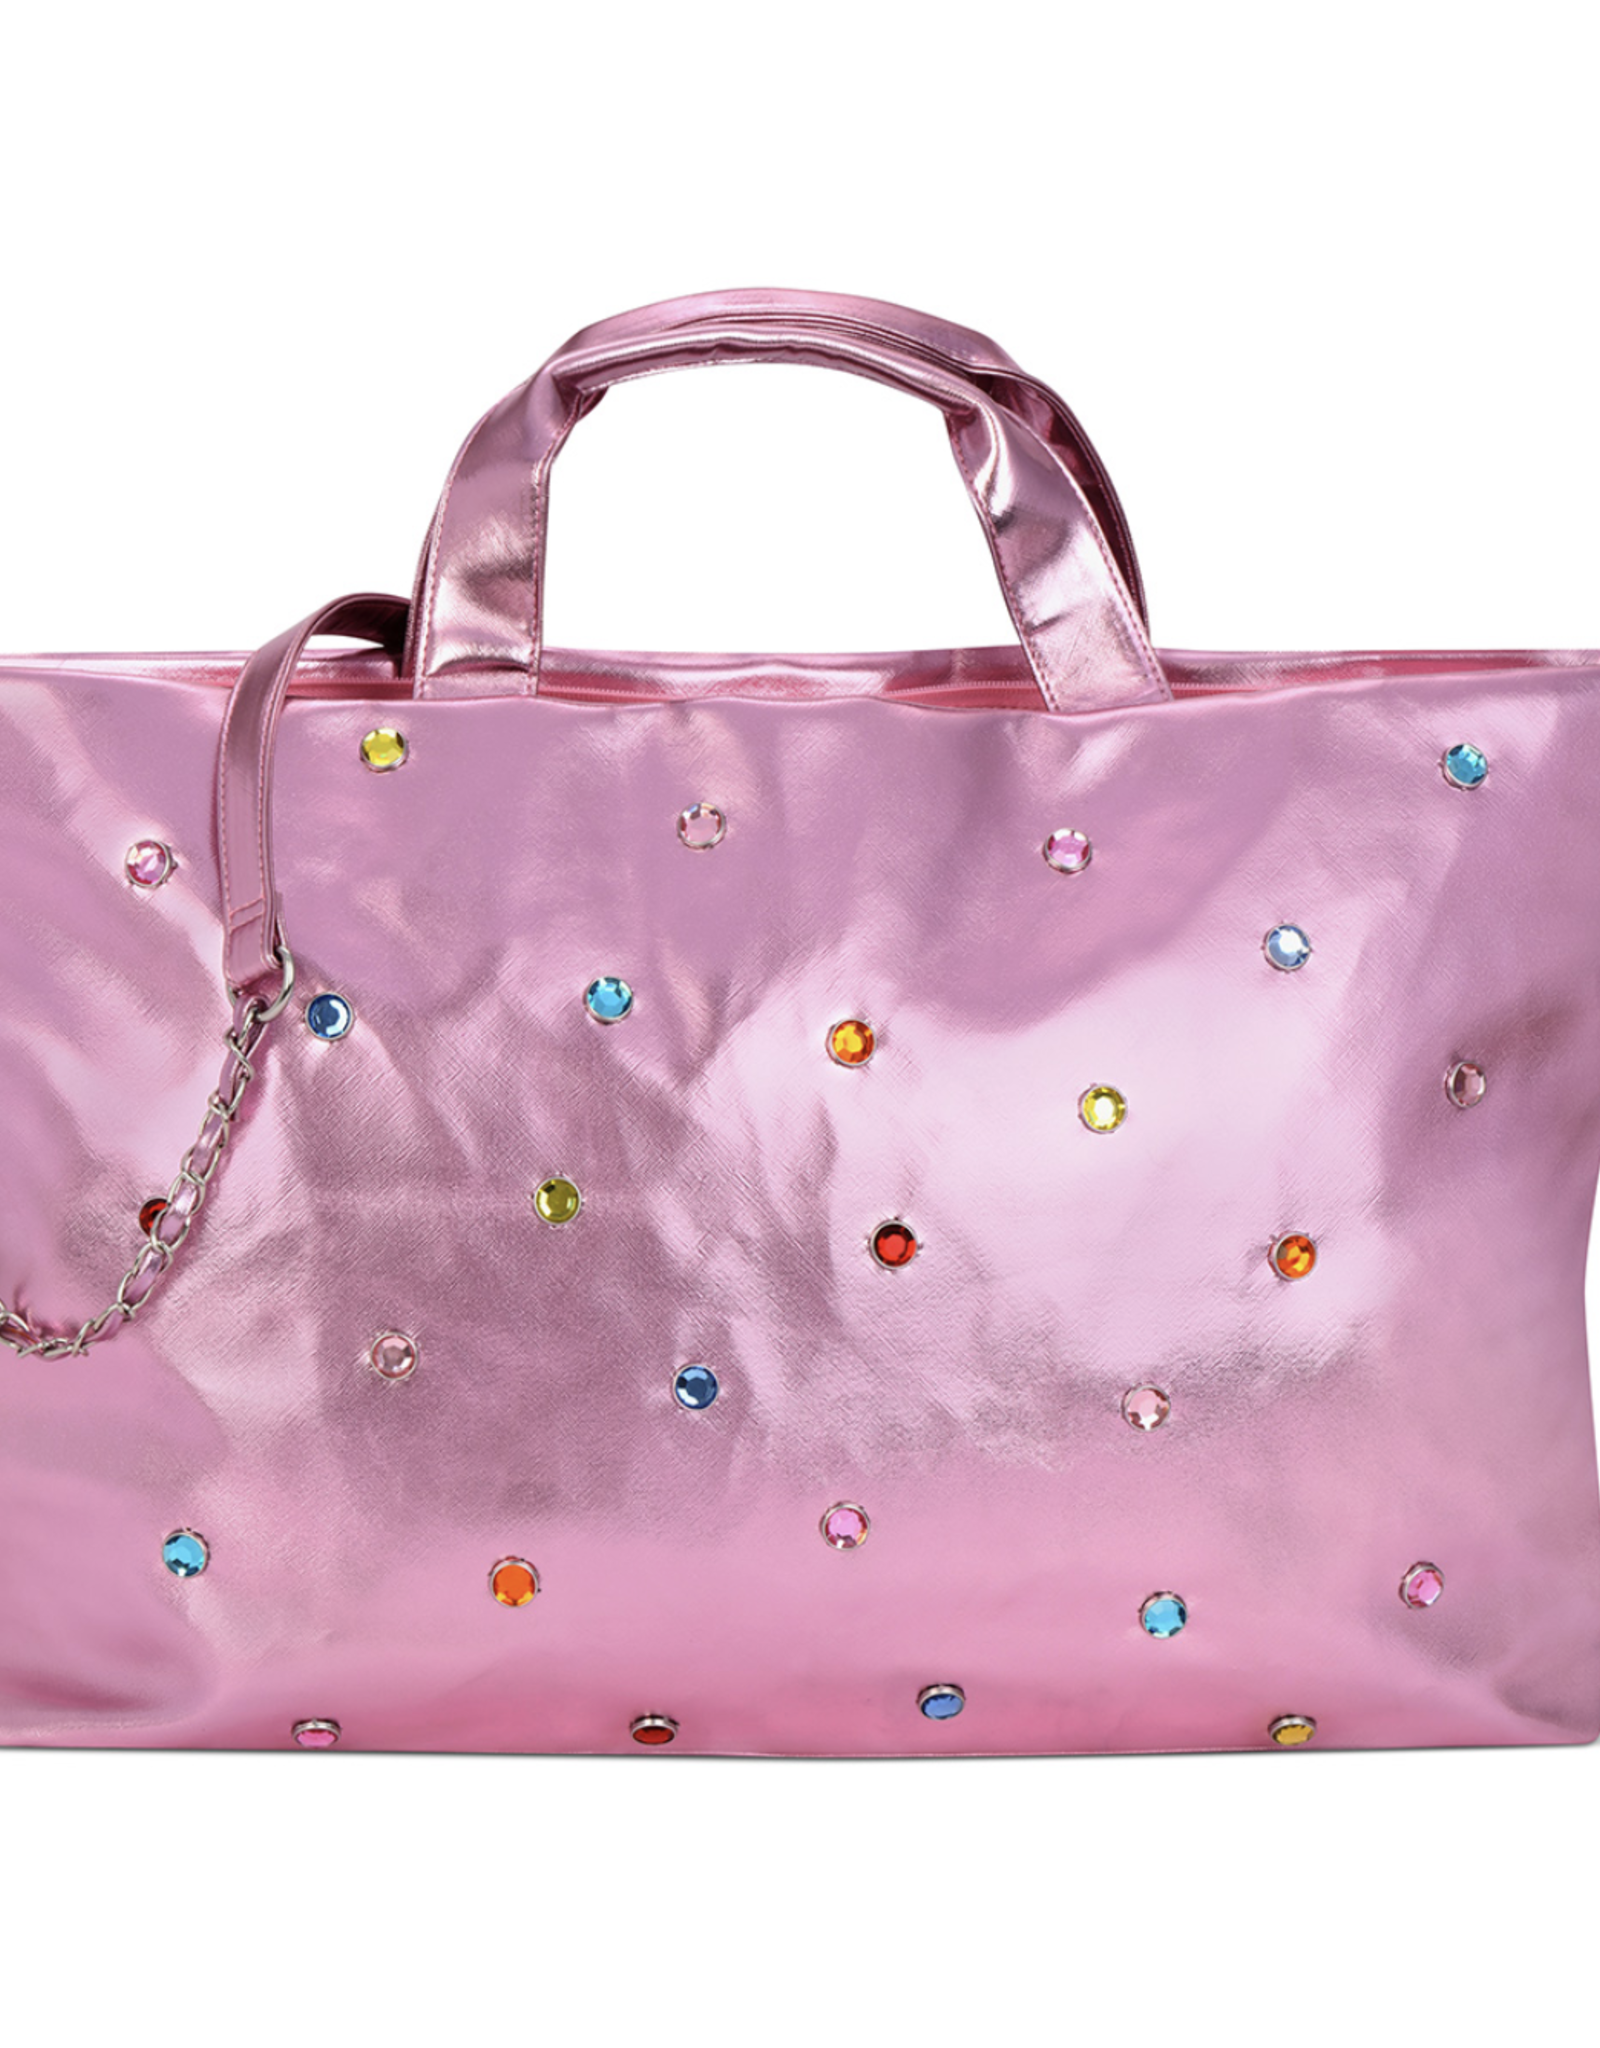 iScream candy pink gem overnight bag